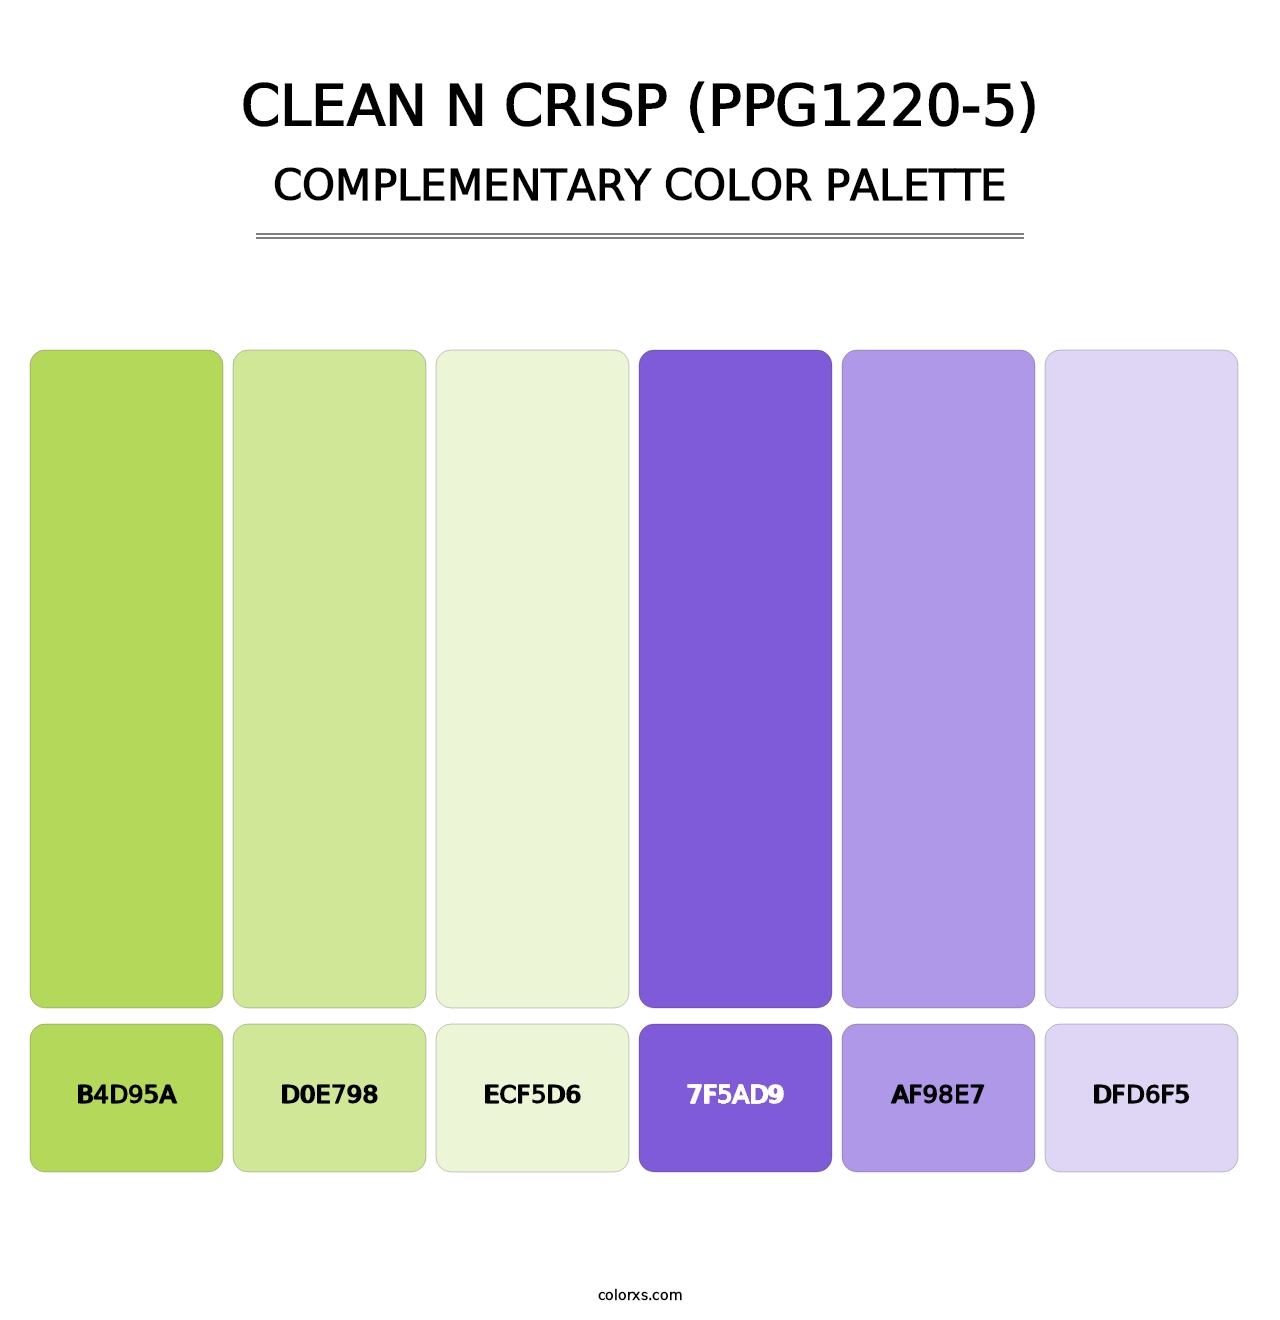 Clean N Crisp (PPG1220-5) - Complementary Color Palette